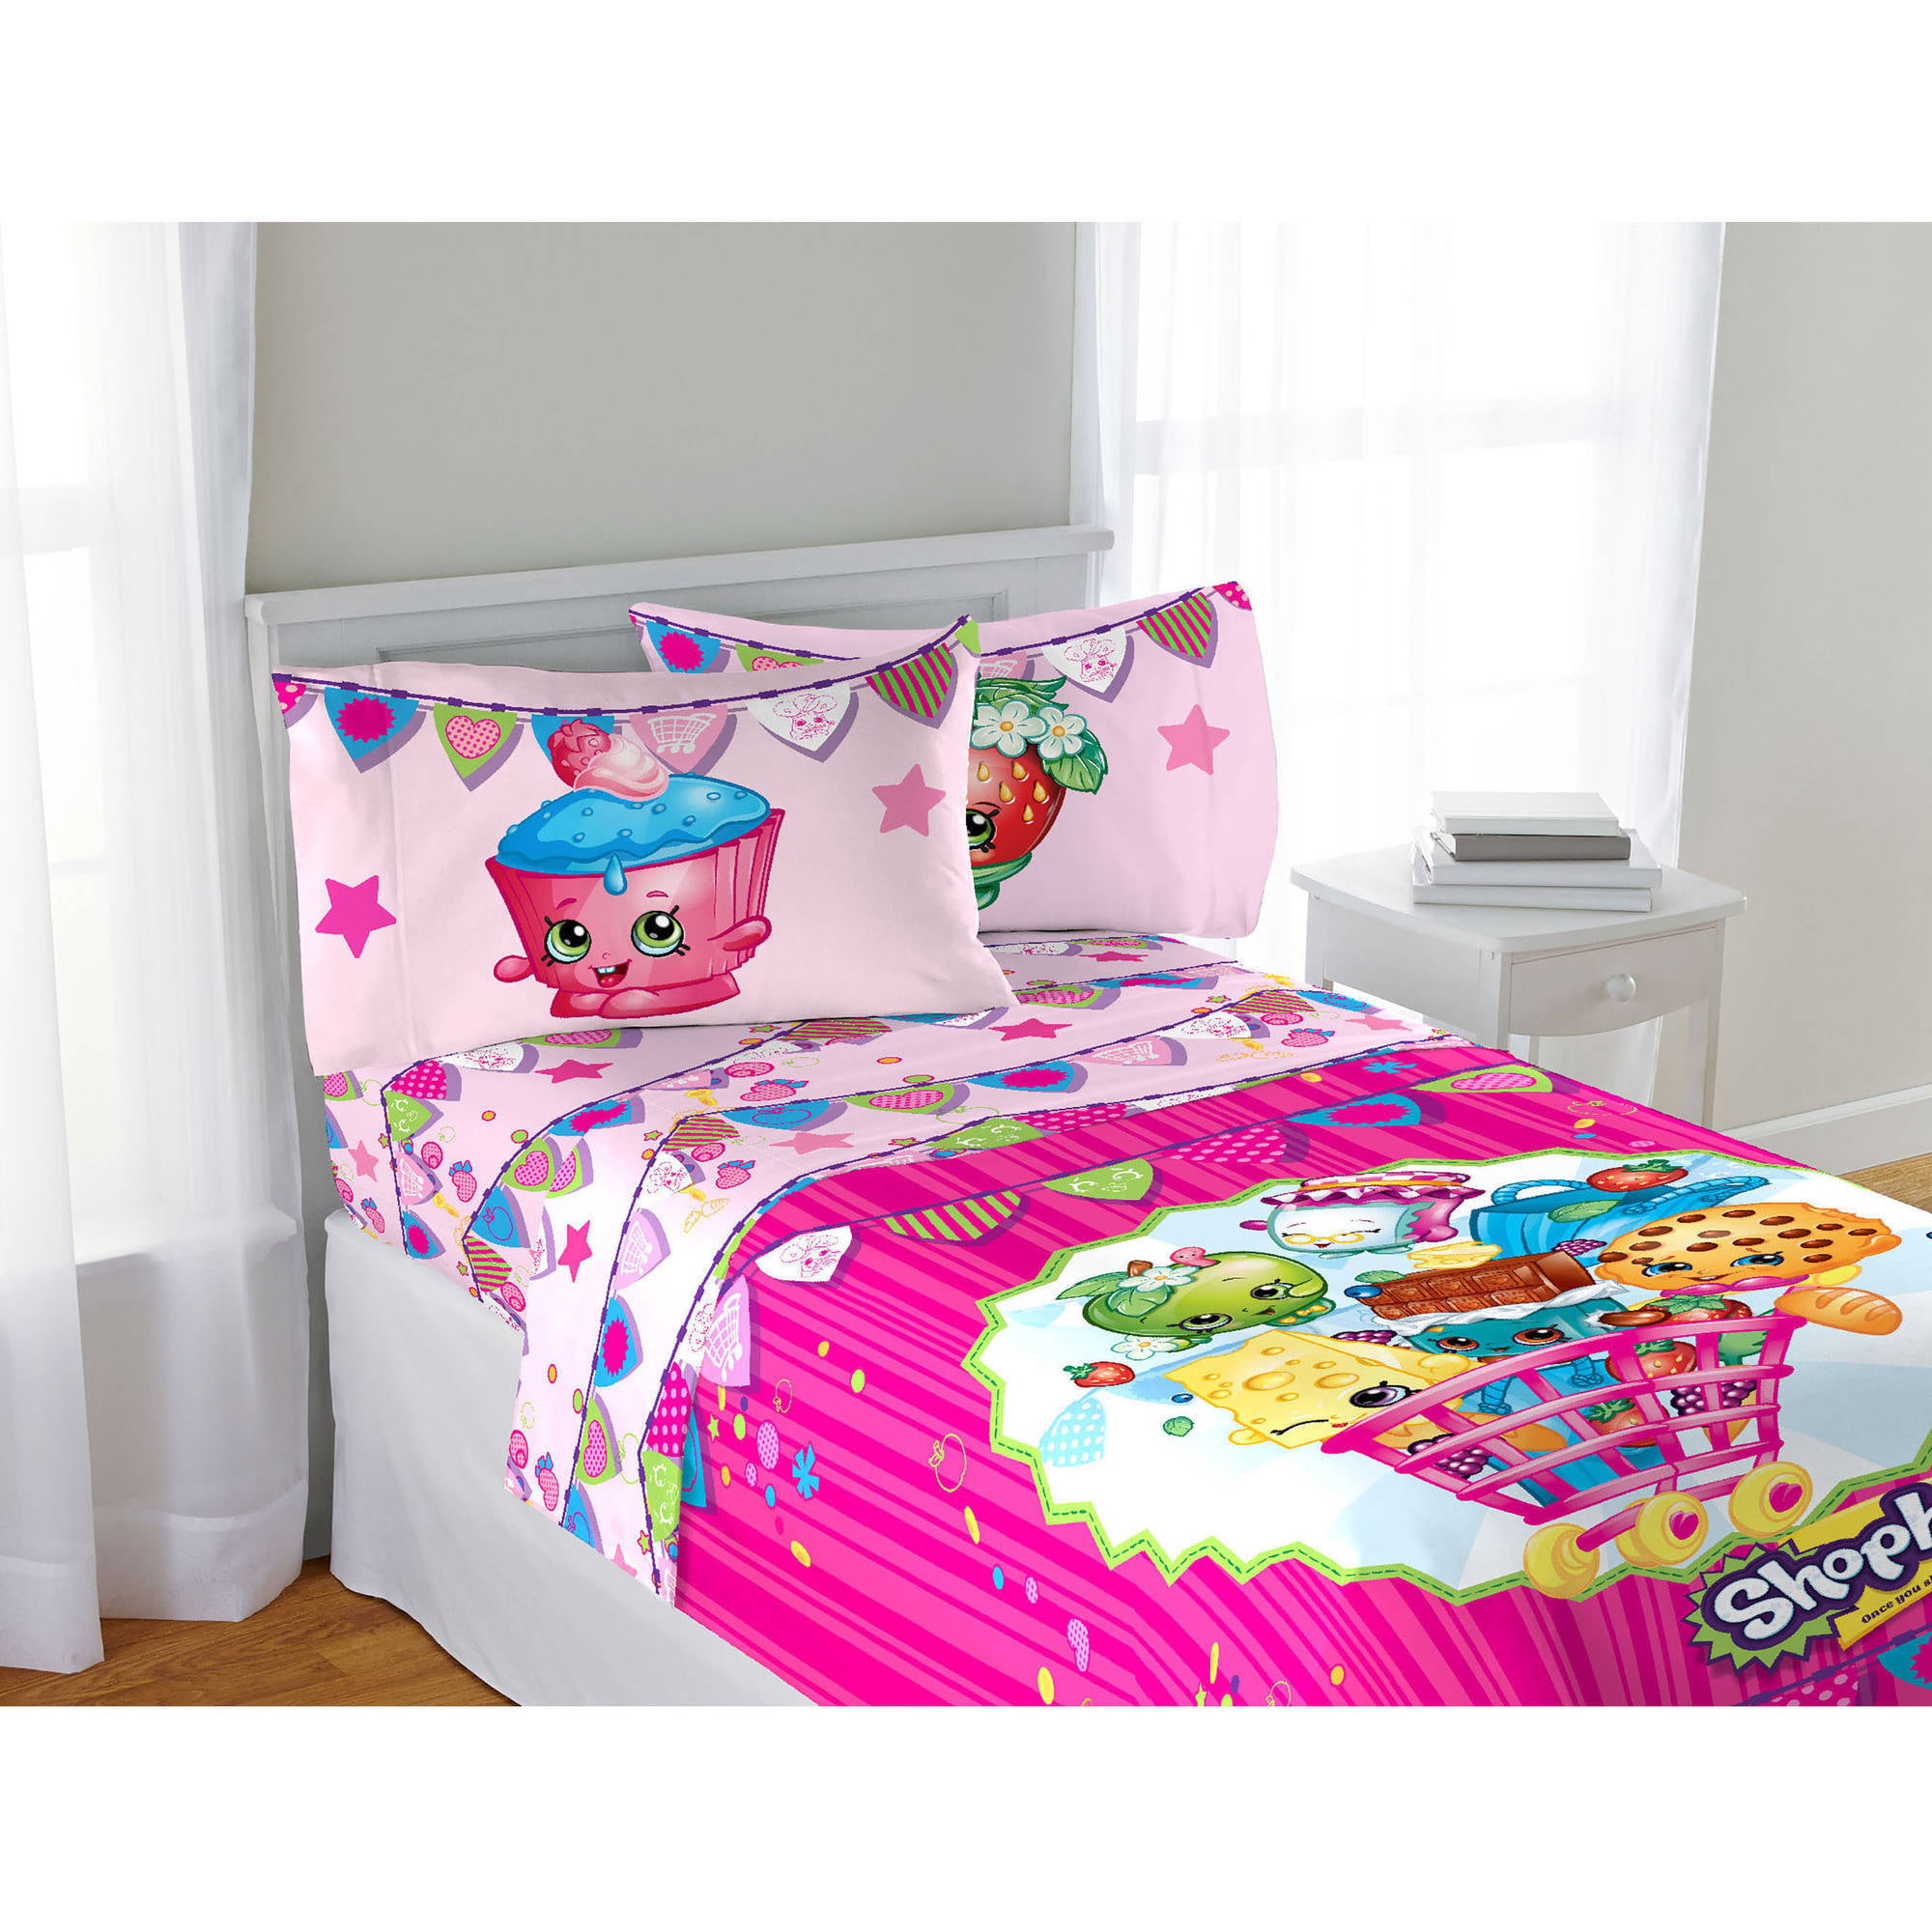 Shopkins Full Size Bed Sheet Set 4 Piece Kids Bedding Sheets Microfiber 